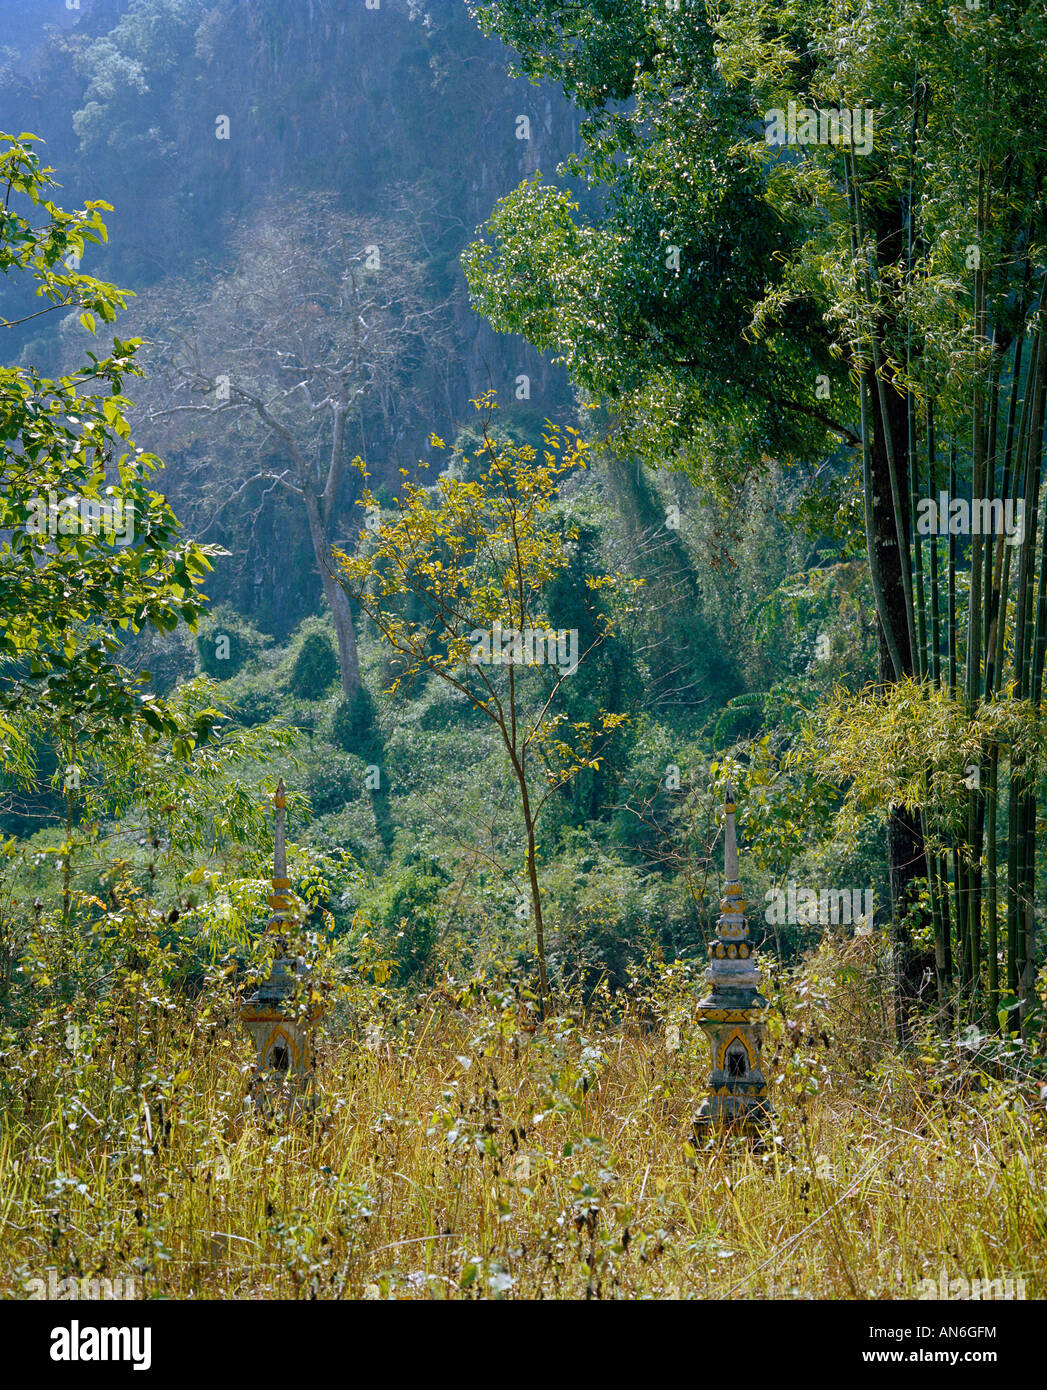 Dschungel mit zugewachsenen kleinen Stupas bei Sala Hinboun Khammouane jungle with overgrown little stupas Stock Photo